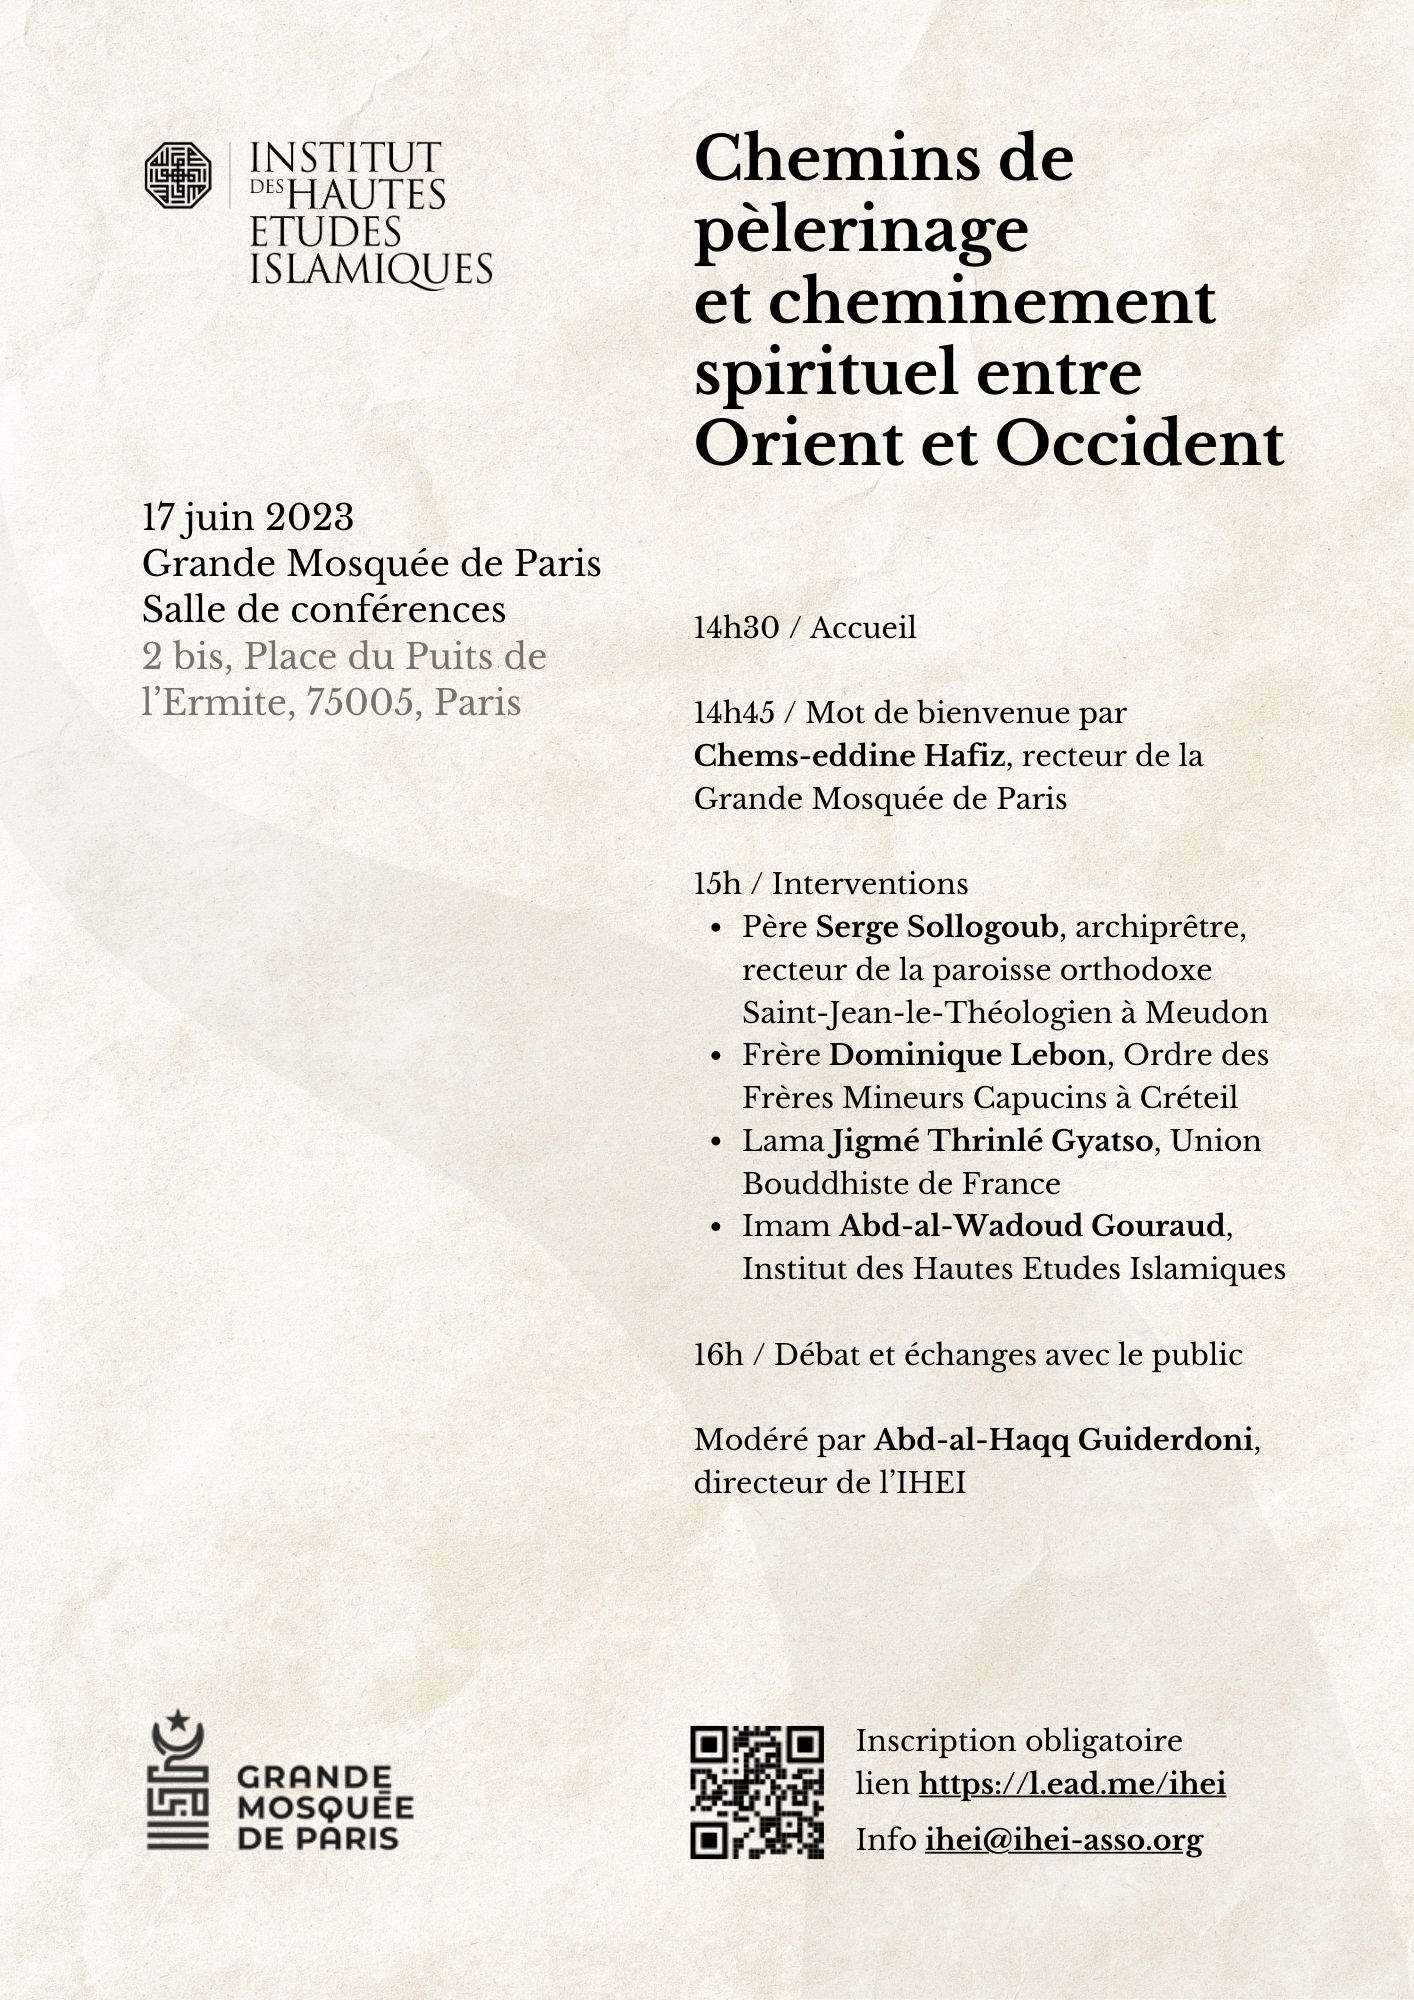 https://www.saphirnews.com/agenda/Chemins-de-pelerinage-et-cheminement-spirituel-entre-Orient-et-Occident_ae738242.html